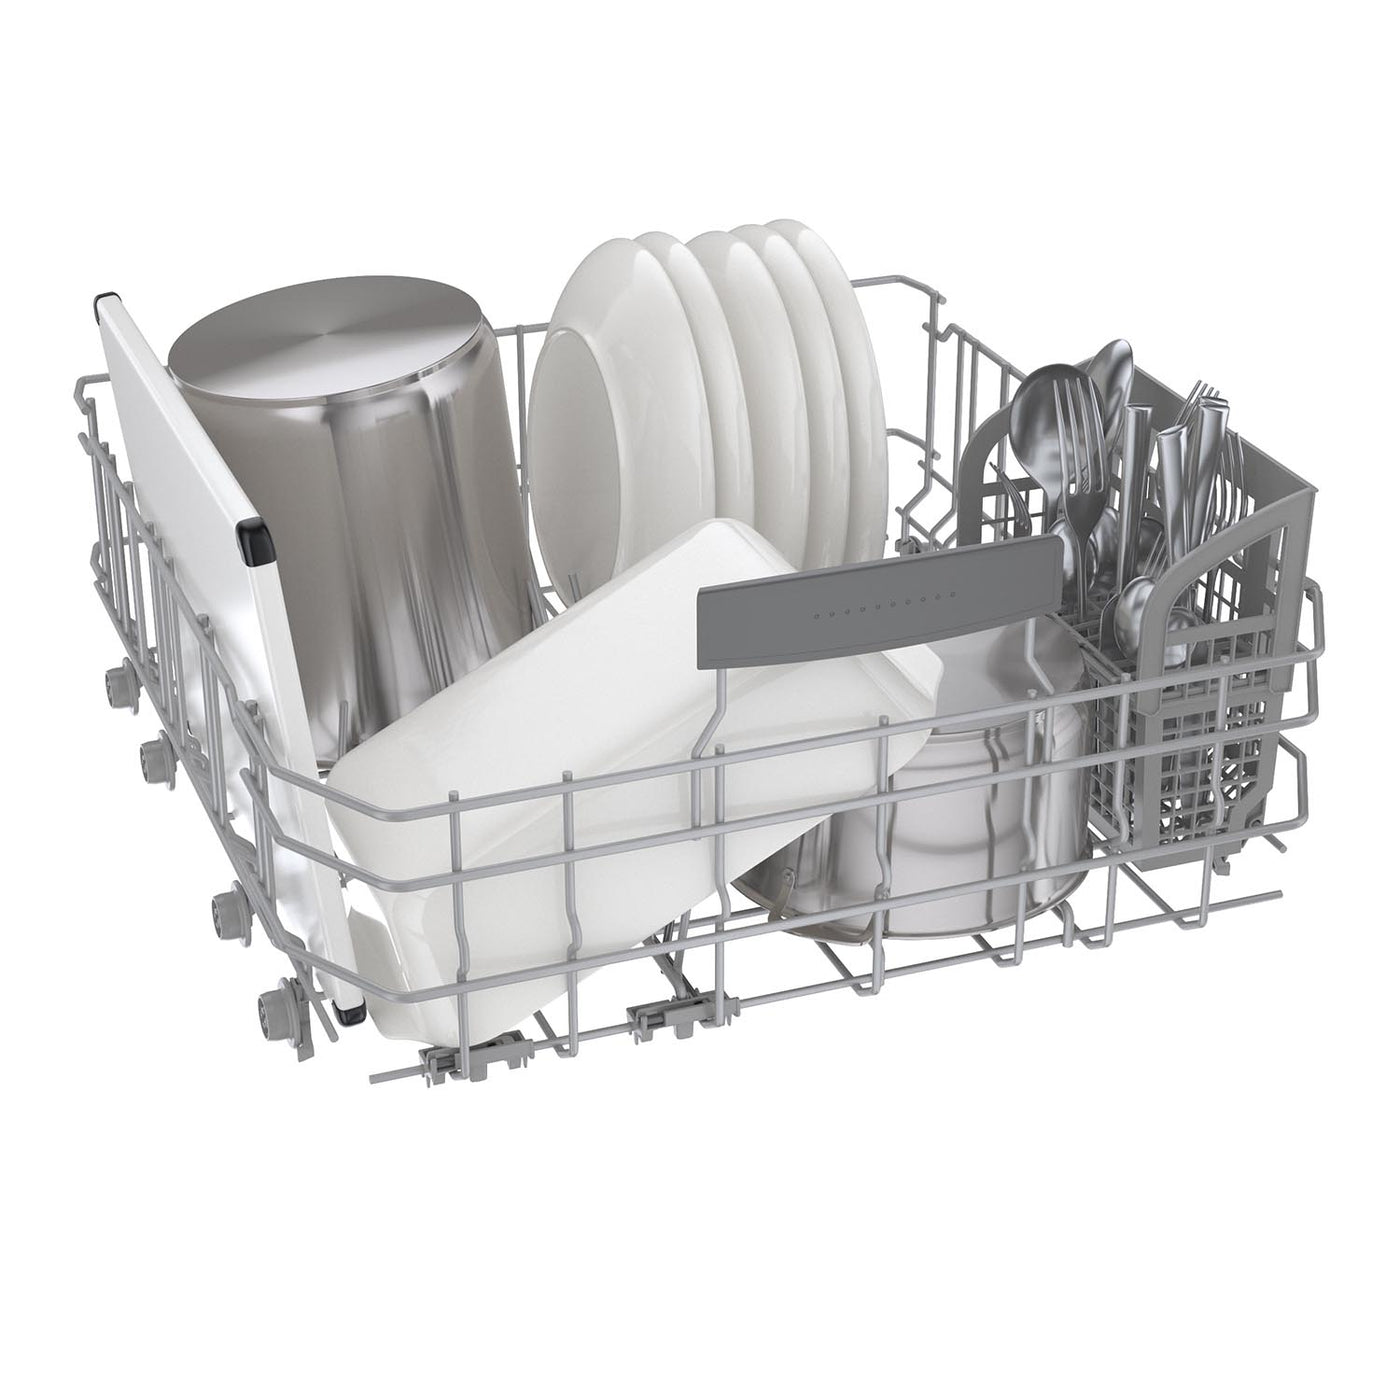 Bosch Custom Panel 24" Smart Dishwasher with Home Connect, Third Rack - SHV78CM3N